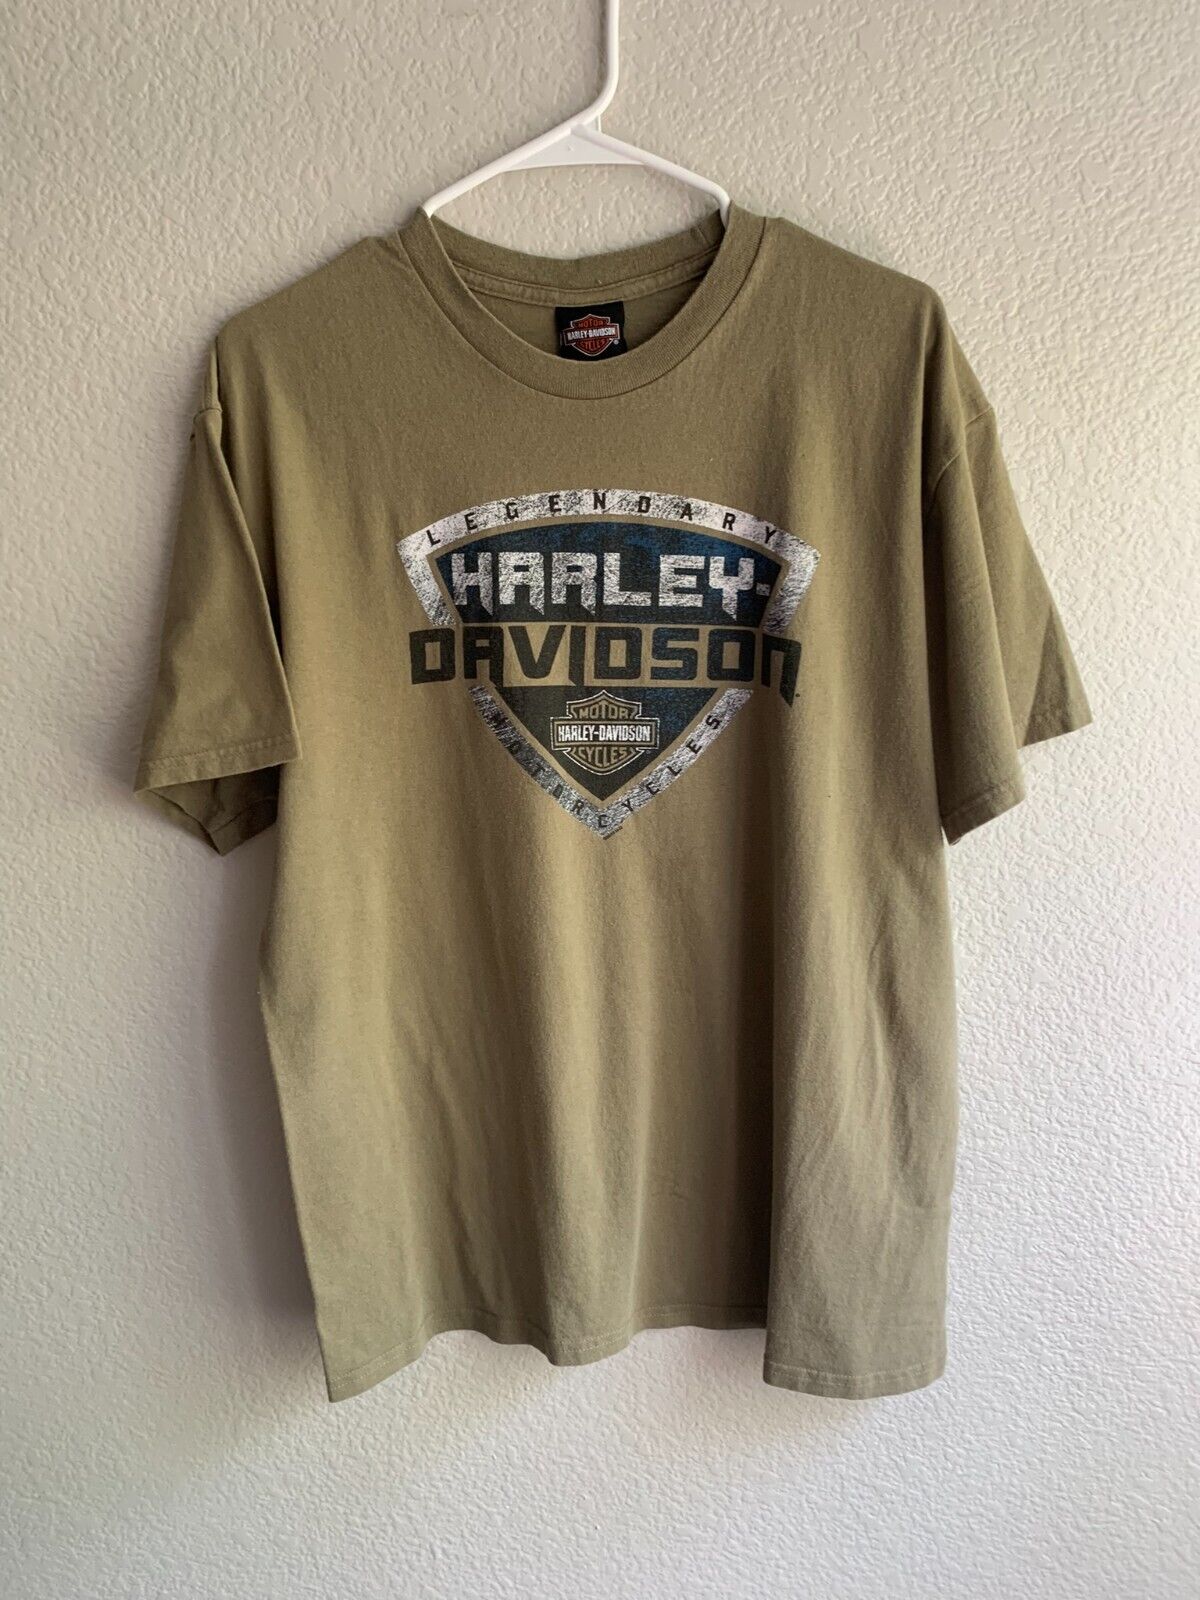 Harley Davidson Men's  Size L Las Vegas Nevada Short Sleeve Motorcycle T-Shirt